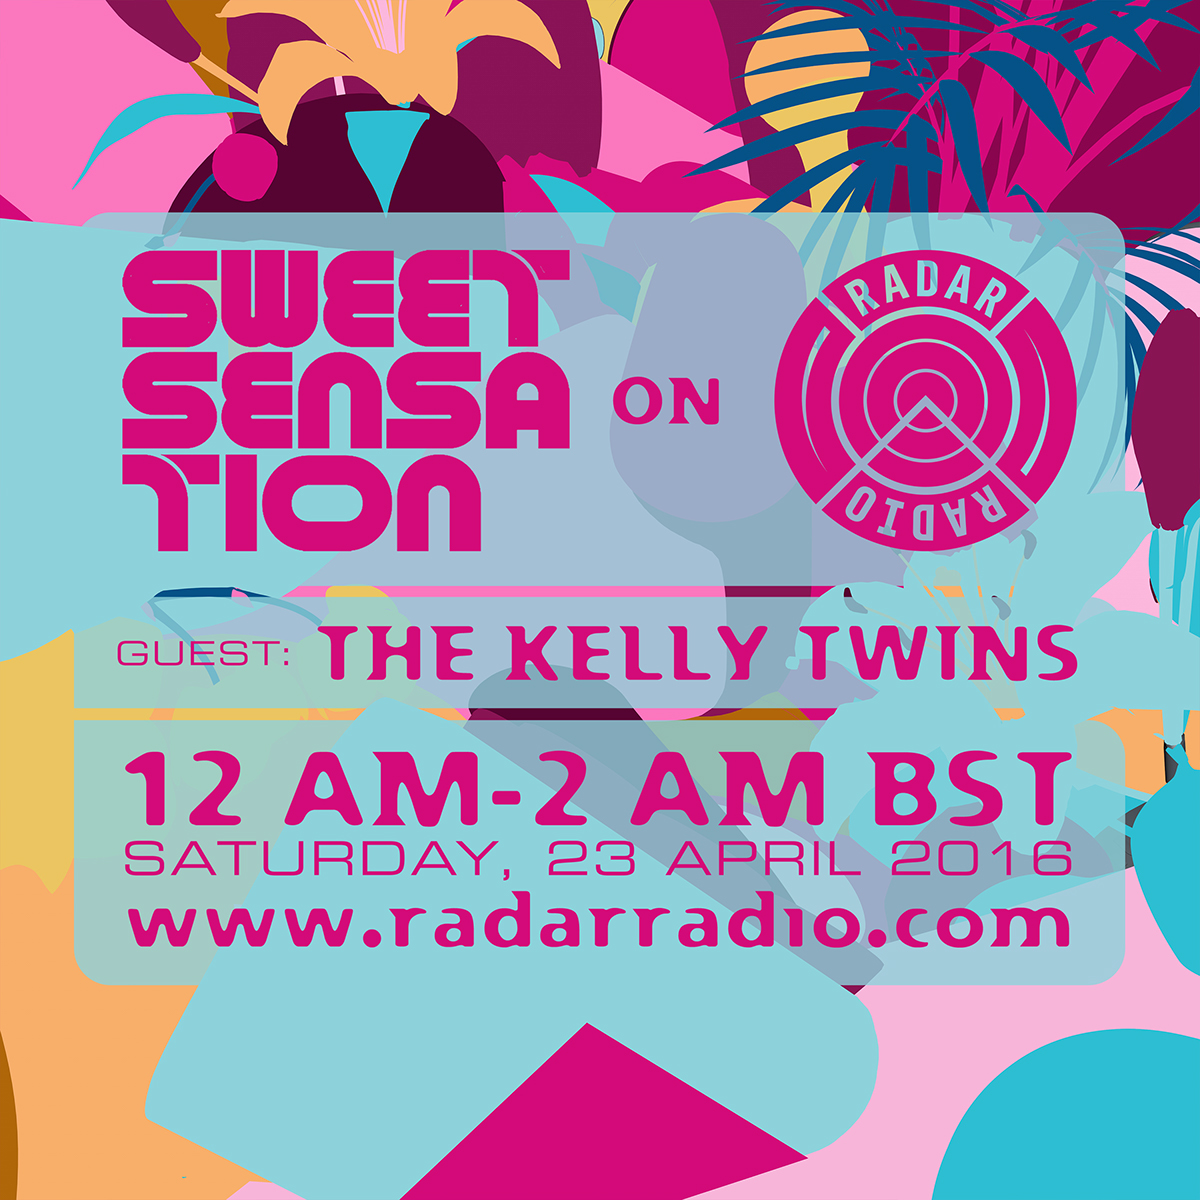 Sweet Sensation radar radio Bristol UK rave flyer